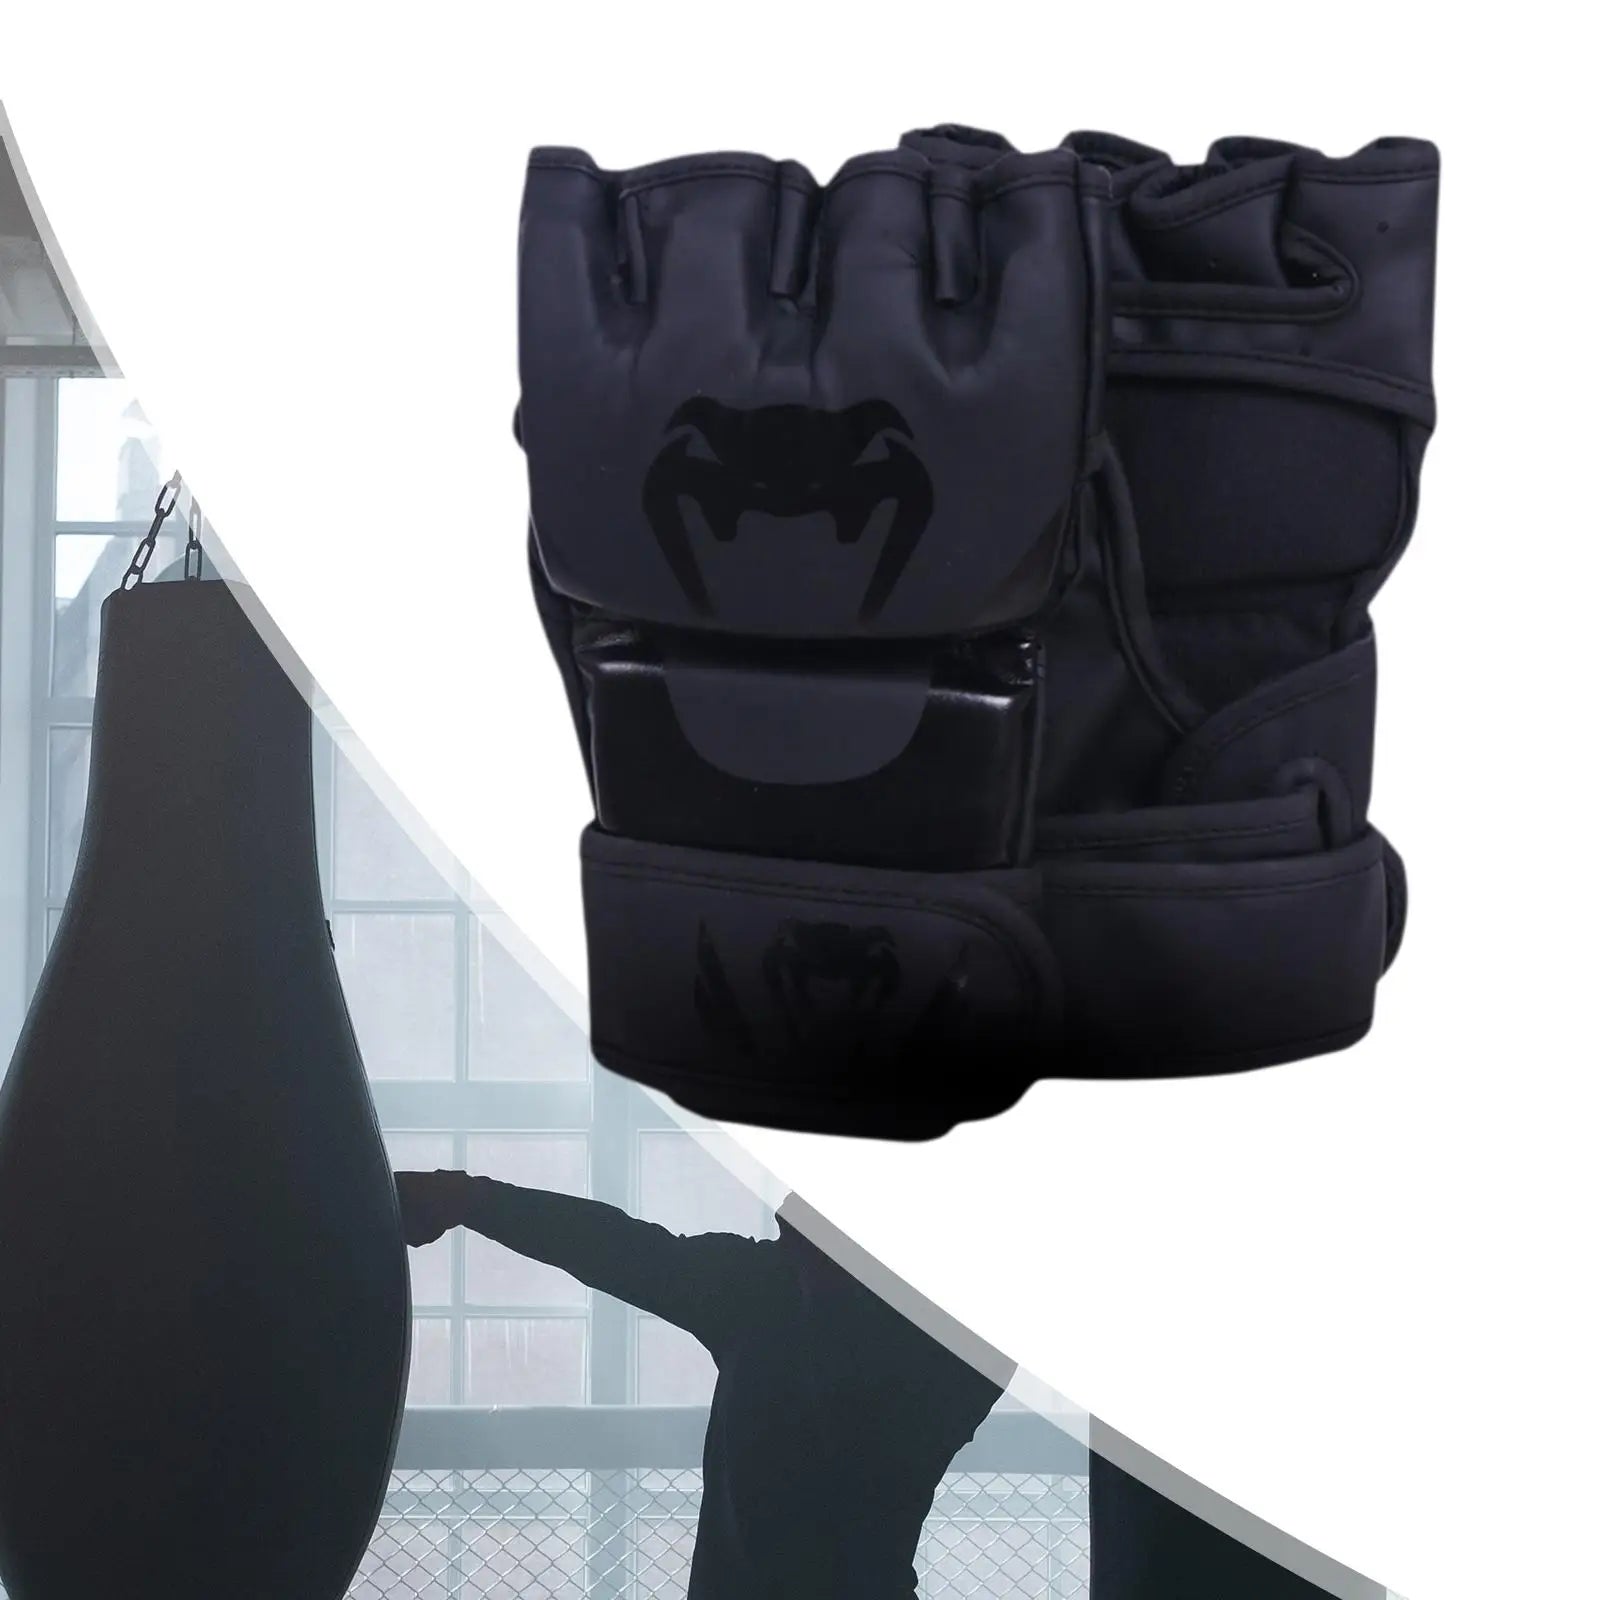 Mma Gloves Half Finger Waterproof Portable Punch Bag Martial Arts